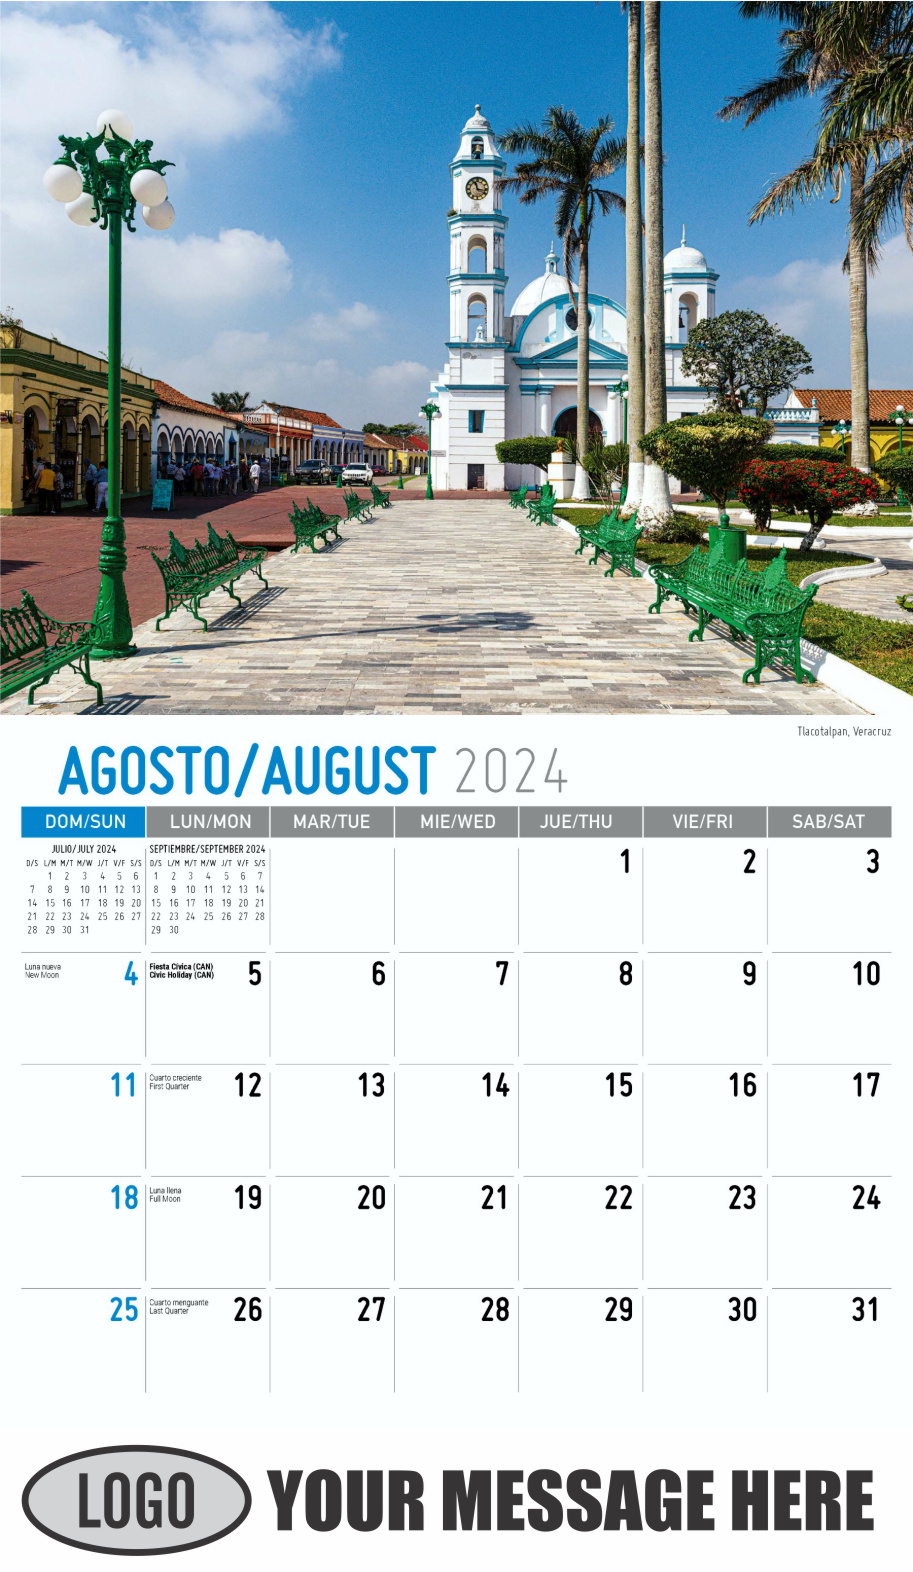 Scenes of Mexico 2024 Bilingual Business Promo Calendar - August